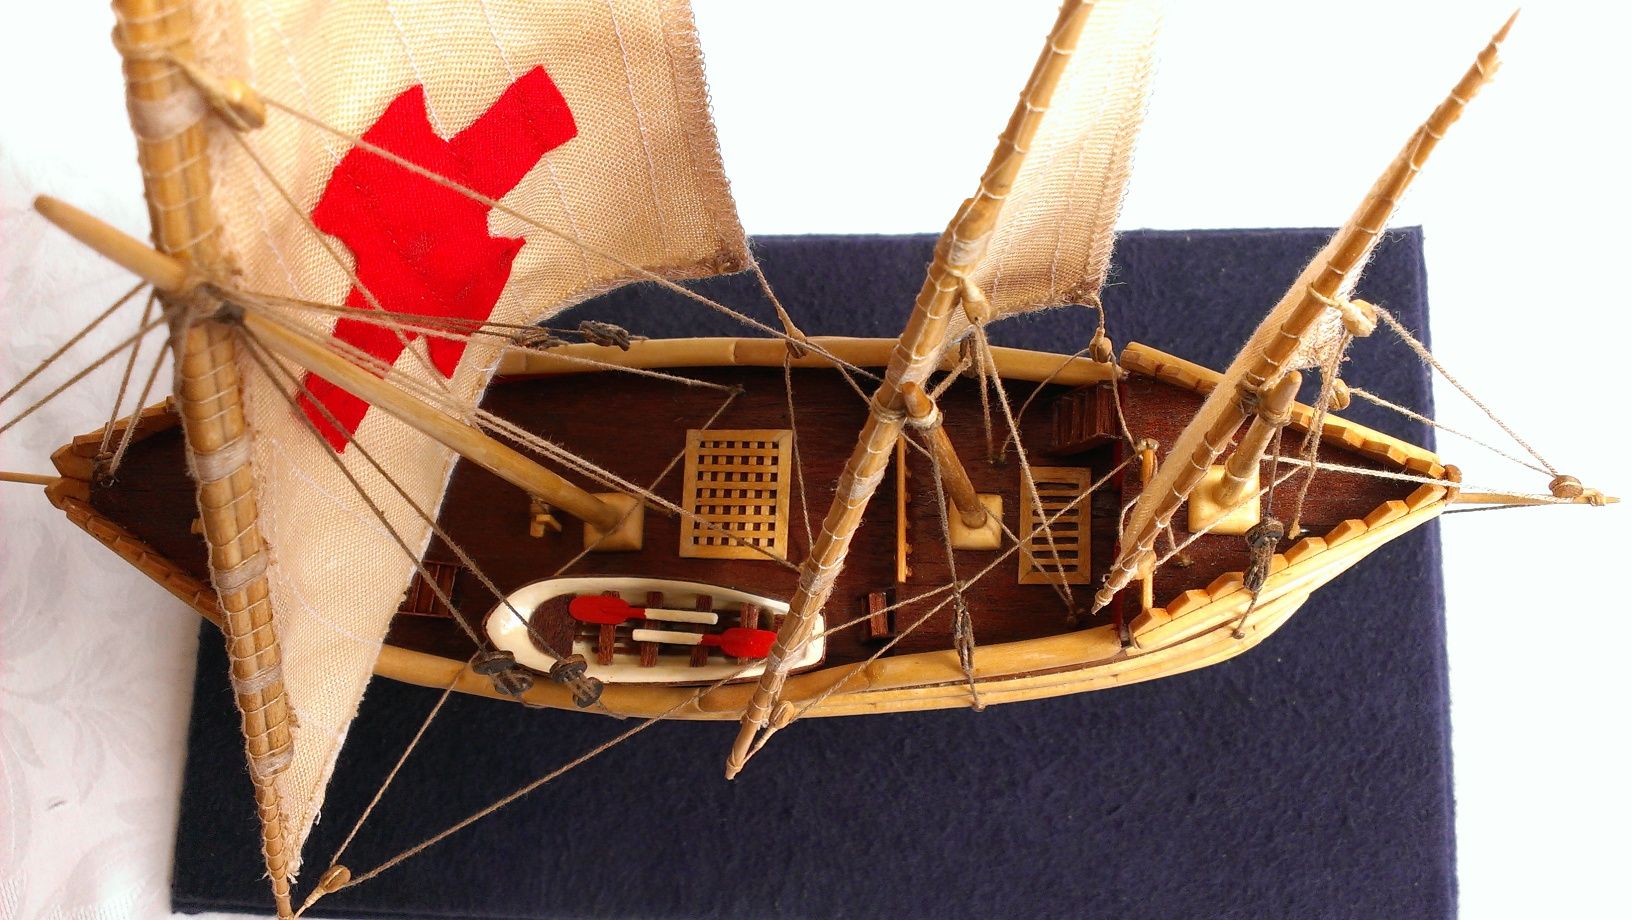 Macheta Pinta/Nina corabie din lemn dupa un plan/ confectionata manual